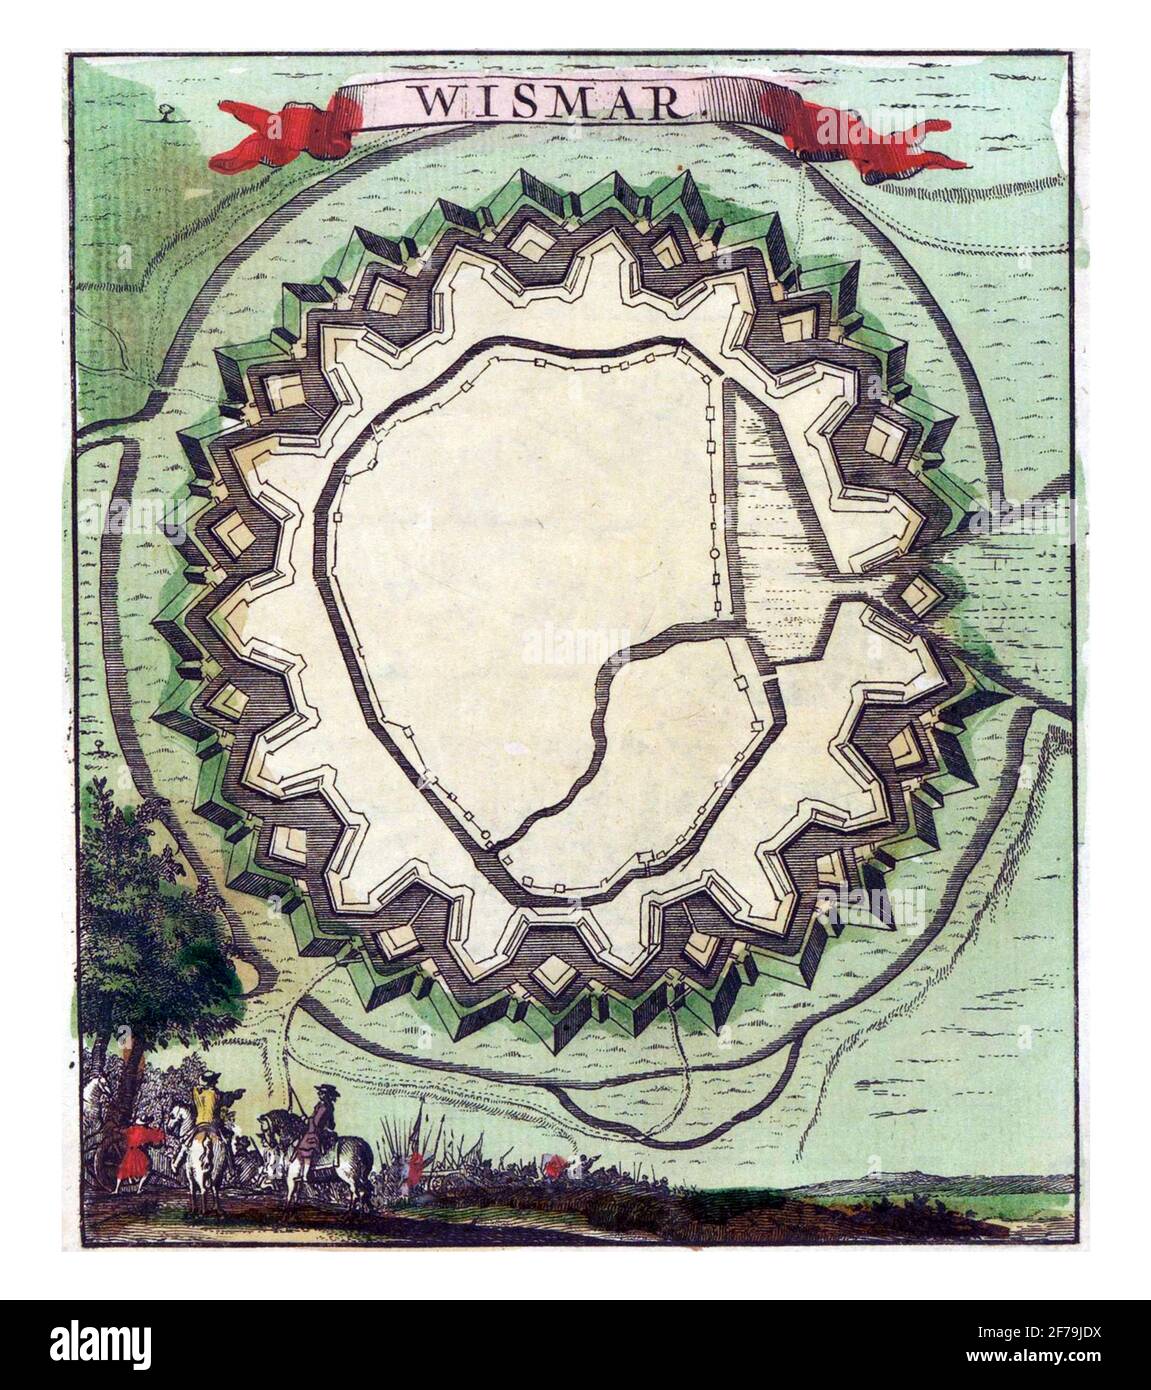 Map of Wismar, vintage engraving. Stock Photo